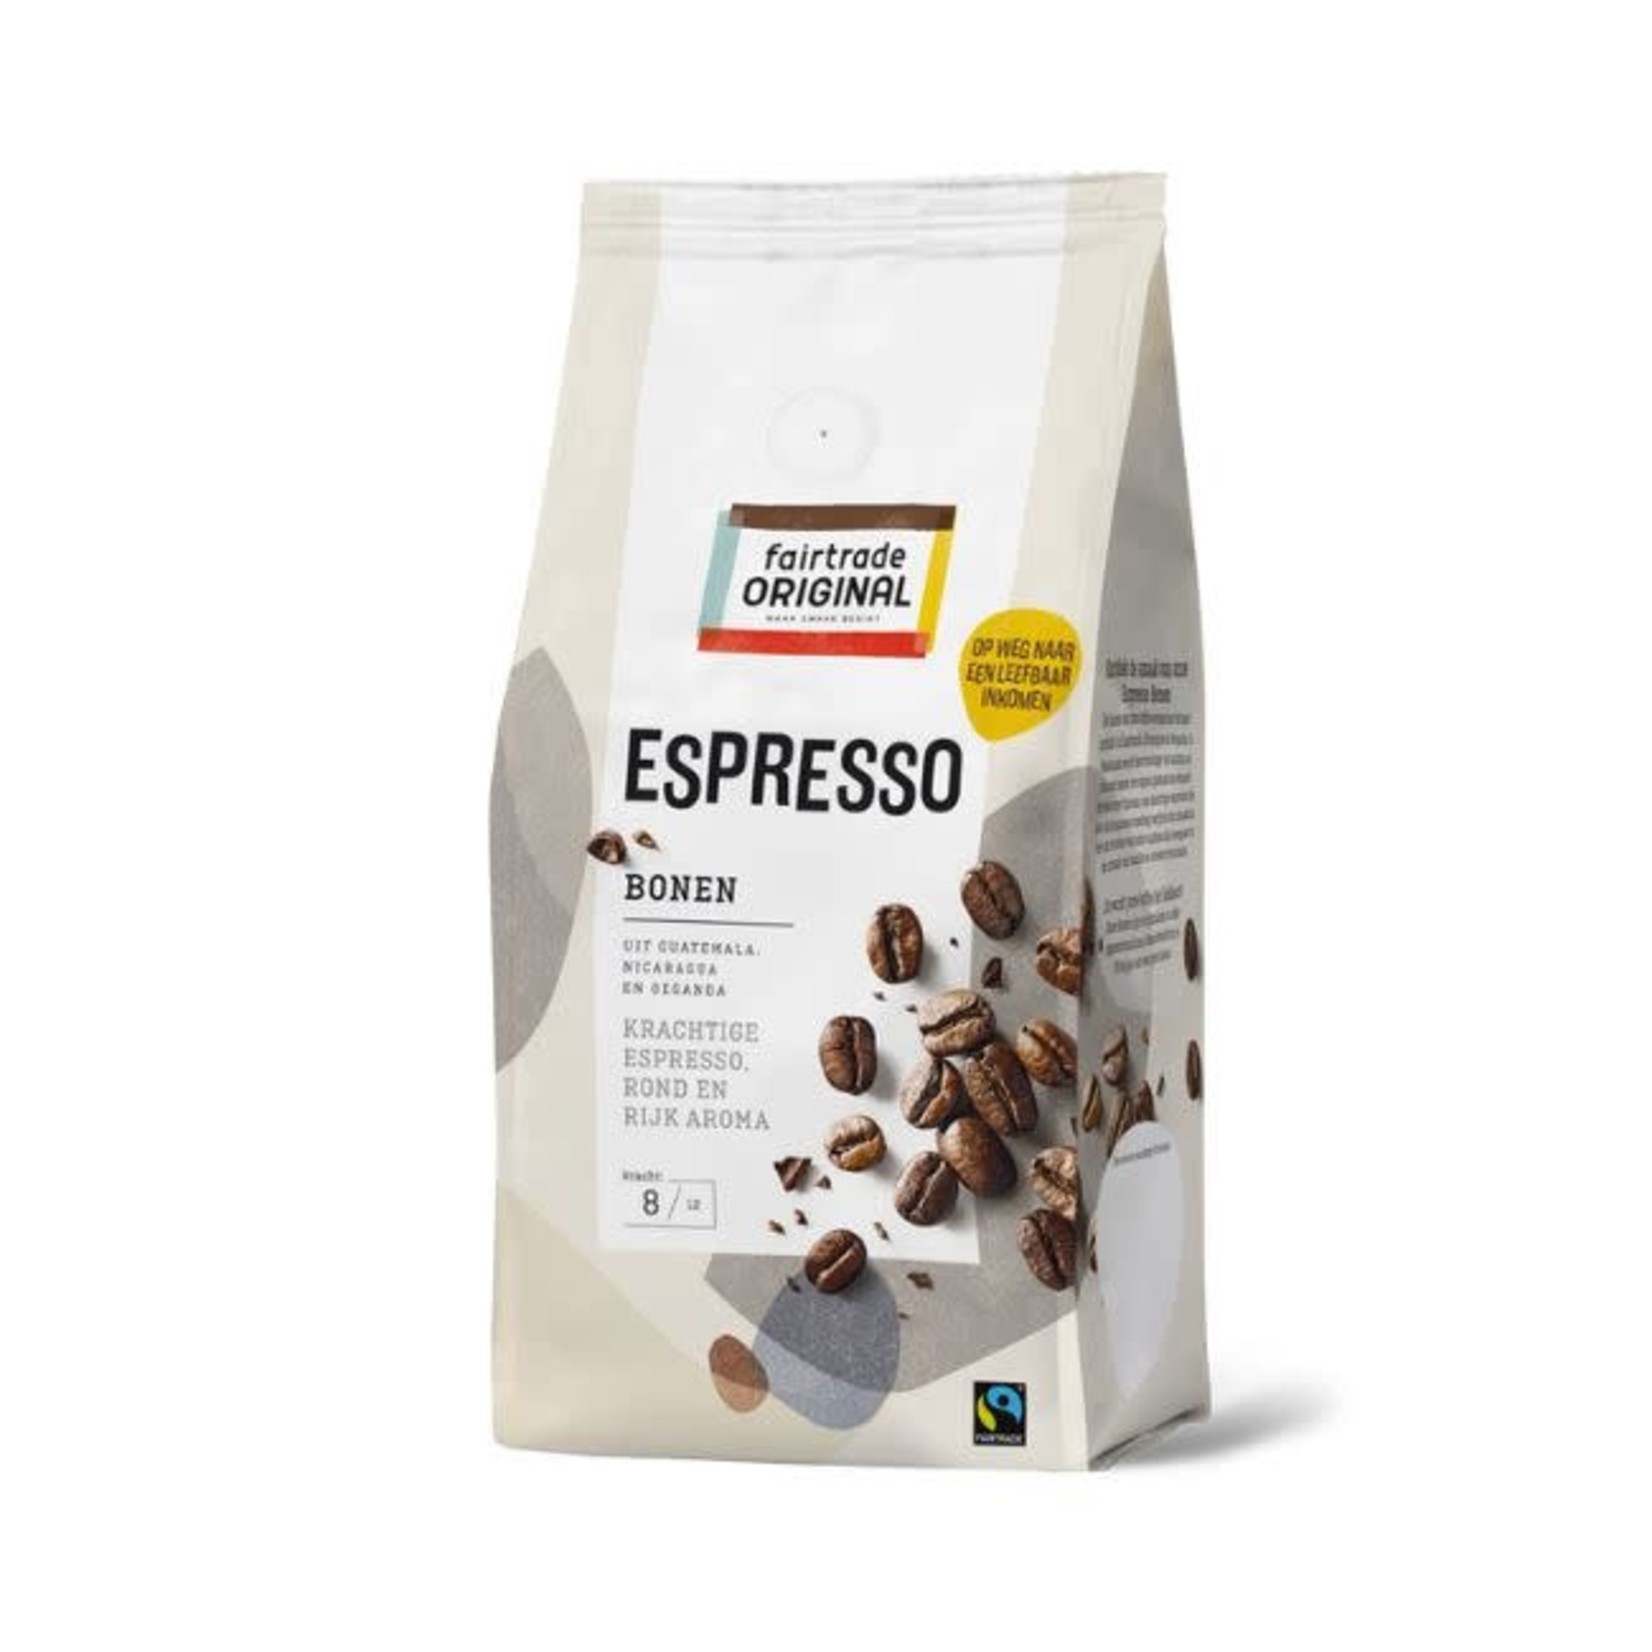 Fairtrade Original Koffiebonen 500g Espresso